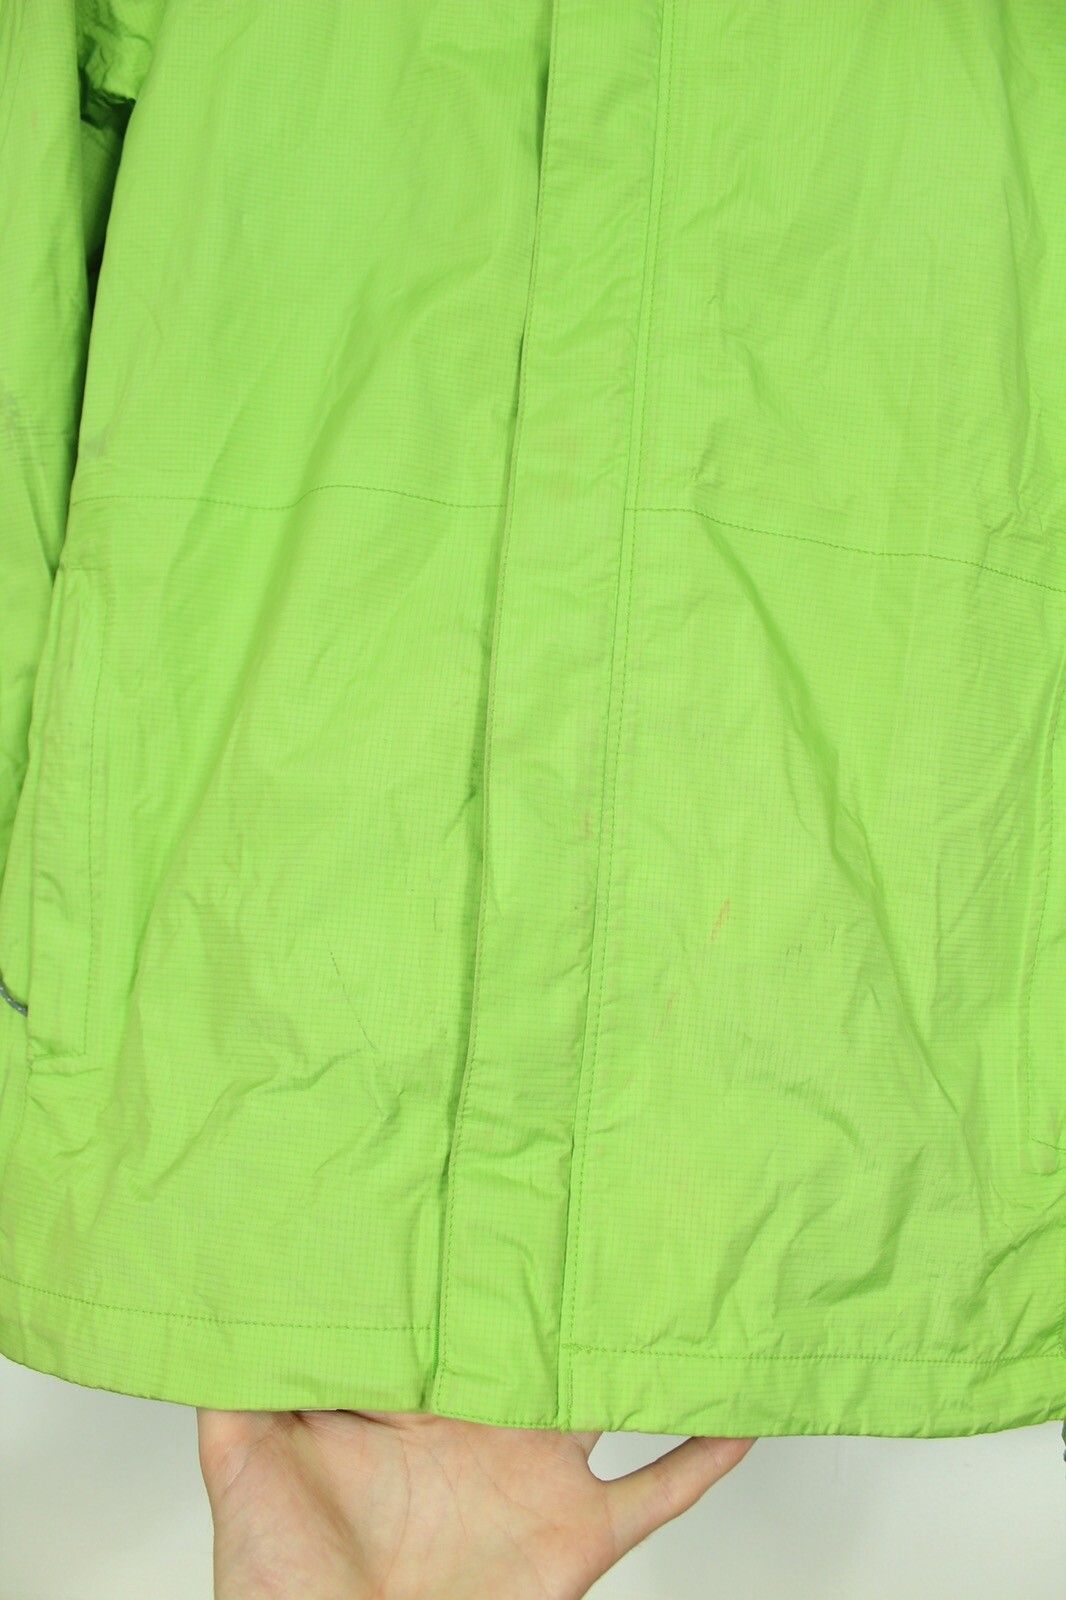 Patagonia Vintage Patagonia Windbreaker Light Jacket Green Size US M / EU 48-50 / 2 - 7 Thumbnail